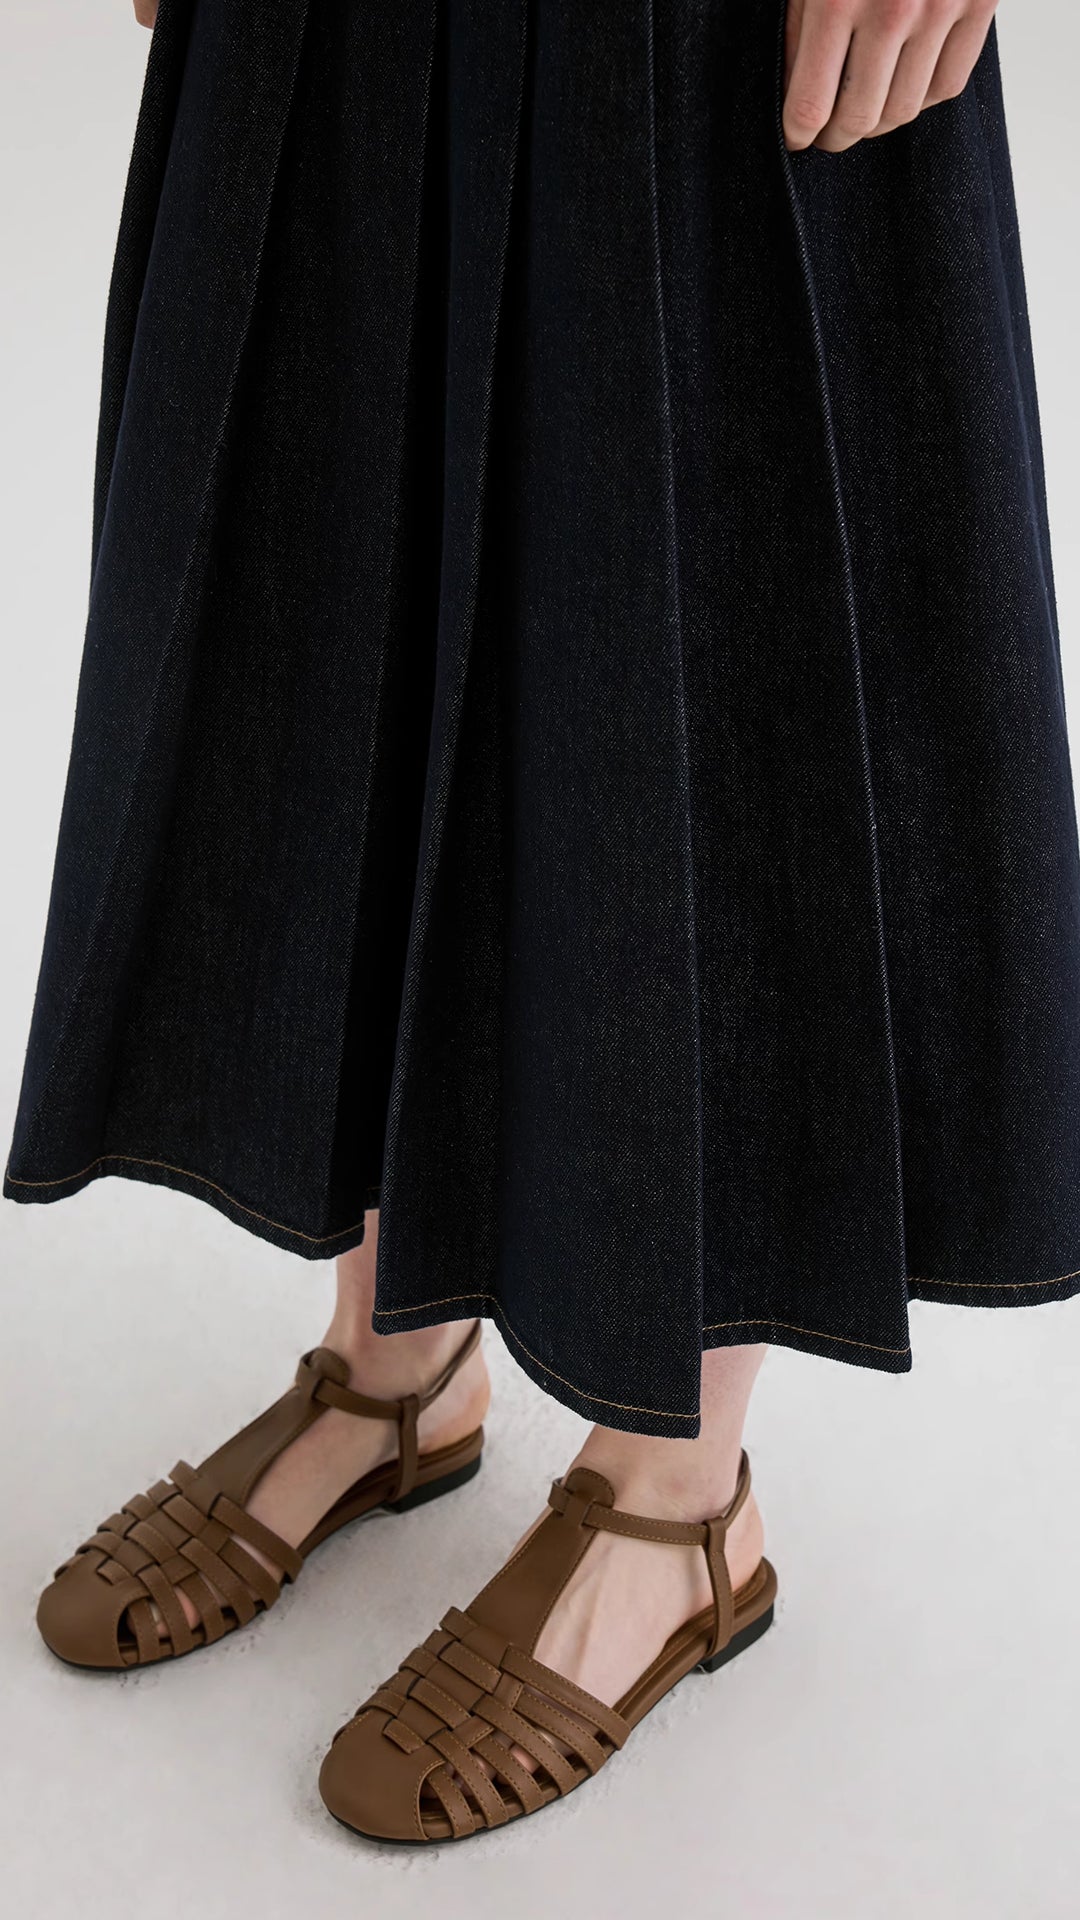 Denim A-line pleated skirt layered with a denim vest set